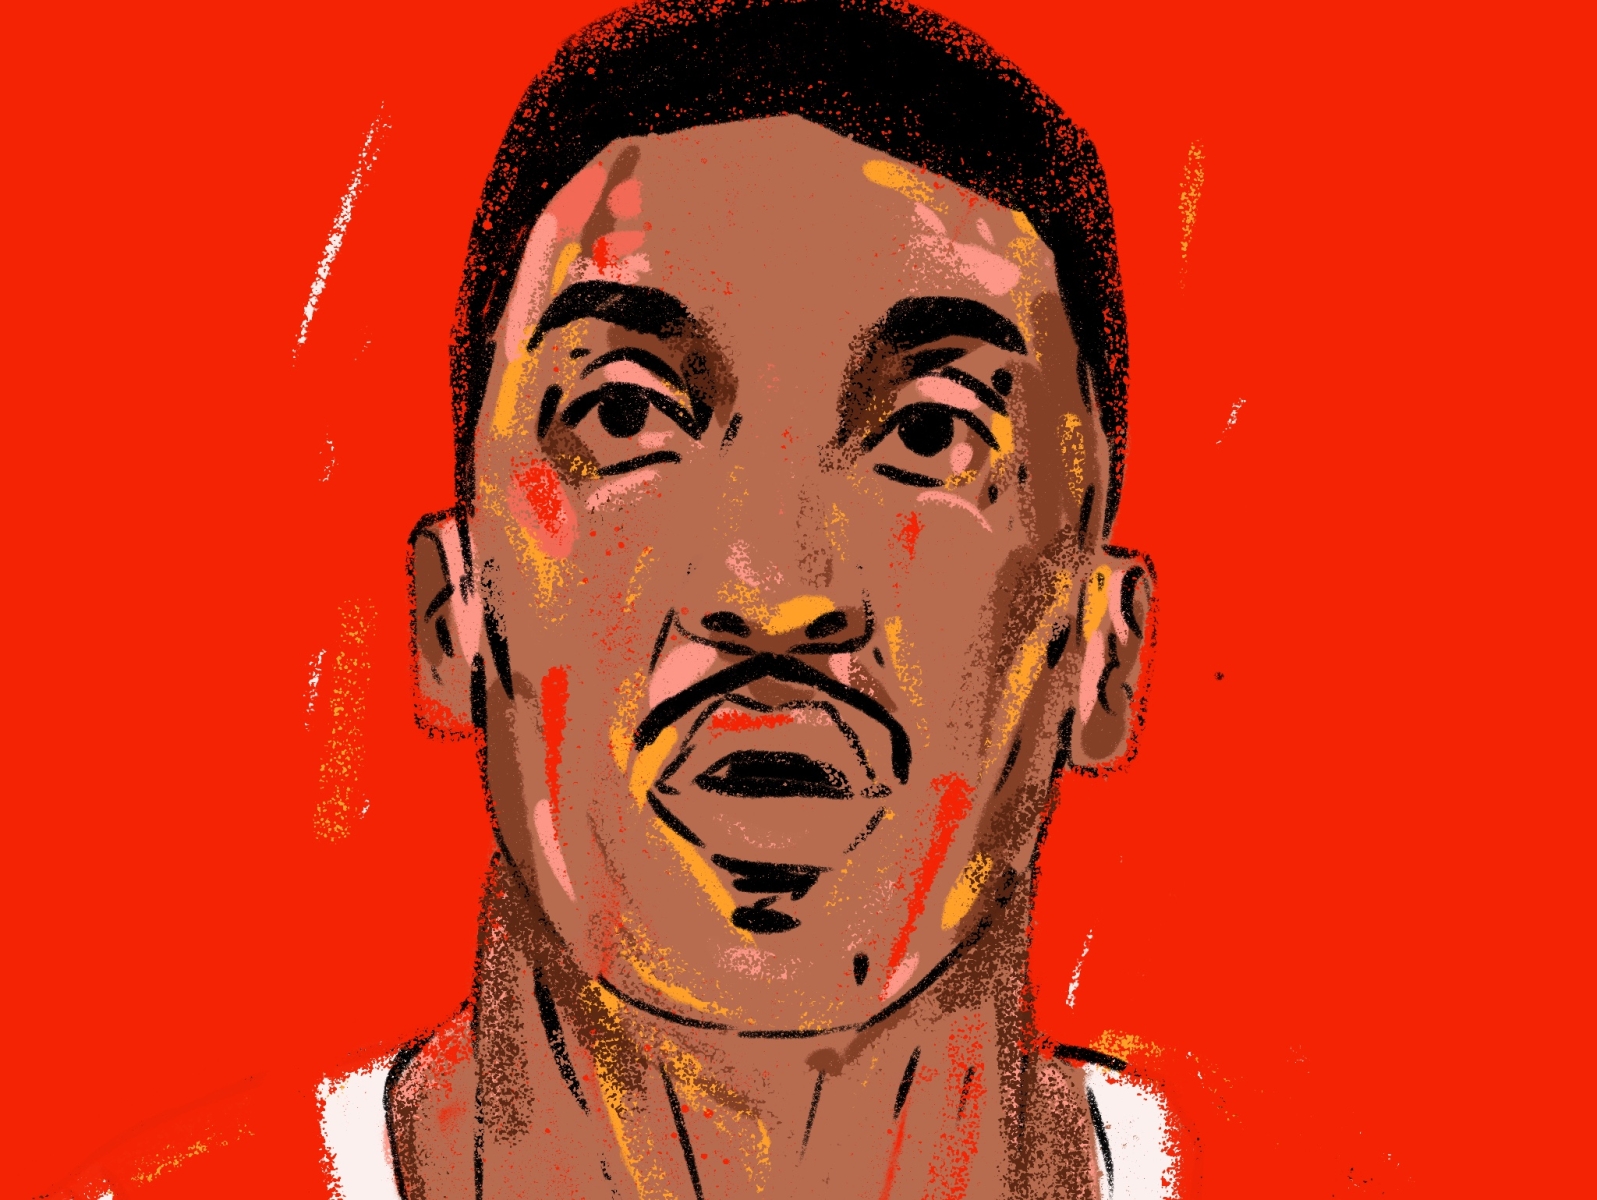 Scottie Pippen portrait art portrait painting portrait illustration portrait chicago basketball player underdog illustrator illustration nba nba star basketball legend chicago bulls